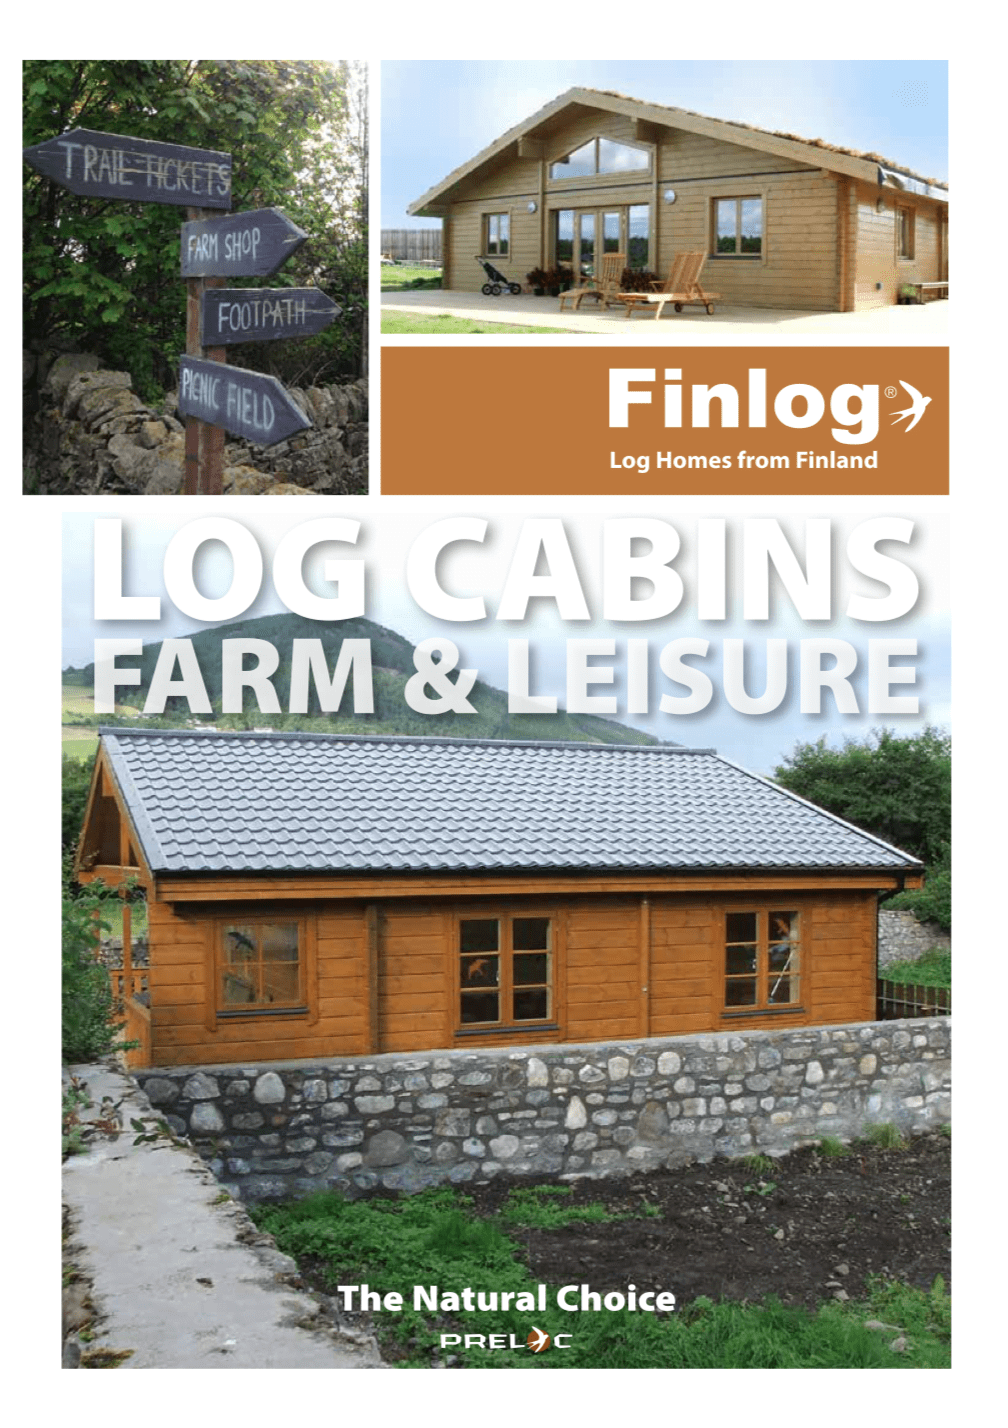 Log Cabins Farm & Leisure Brochure